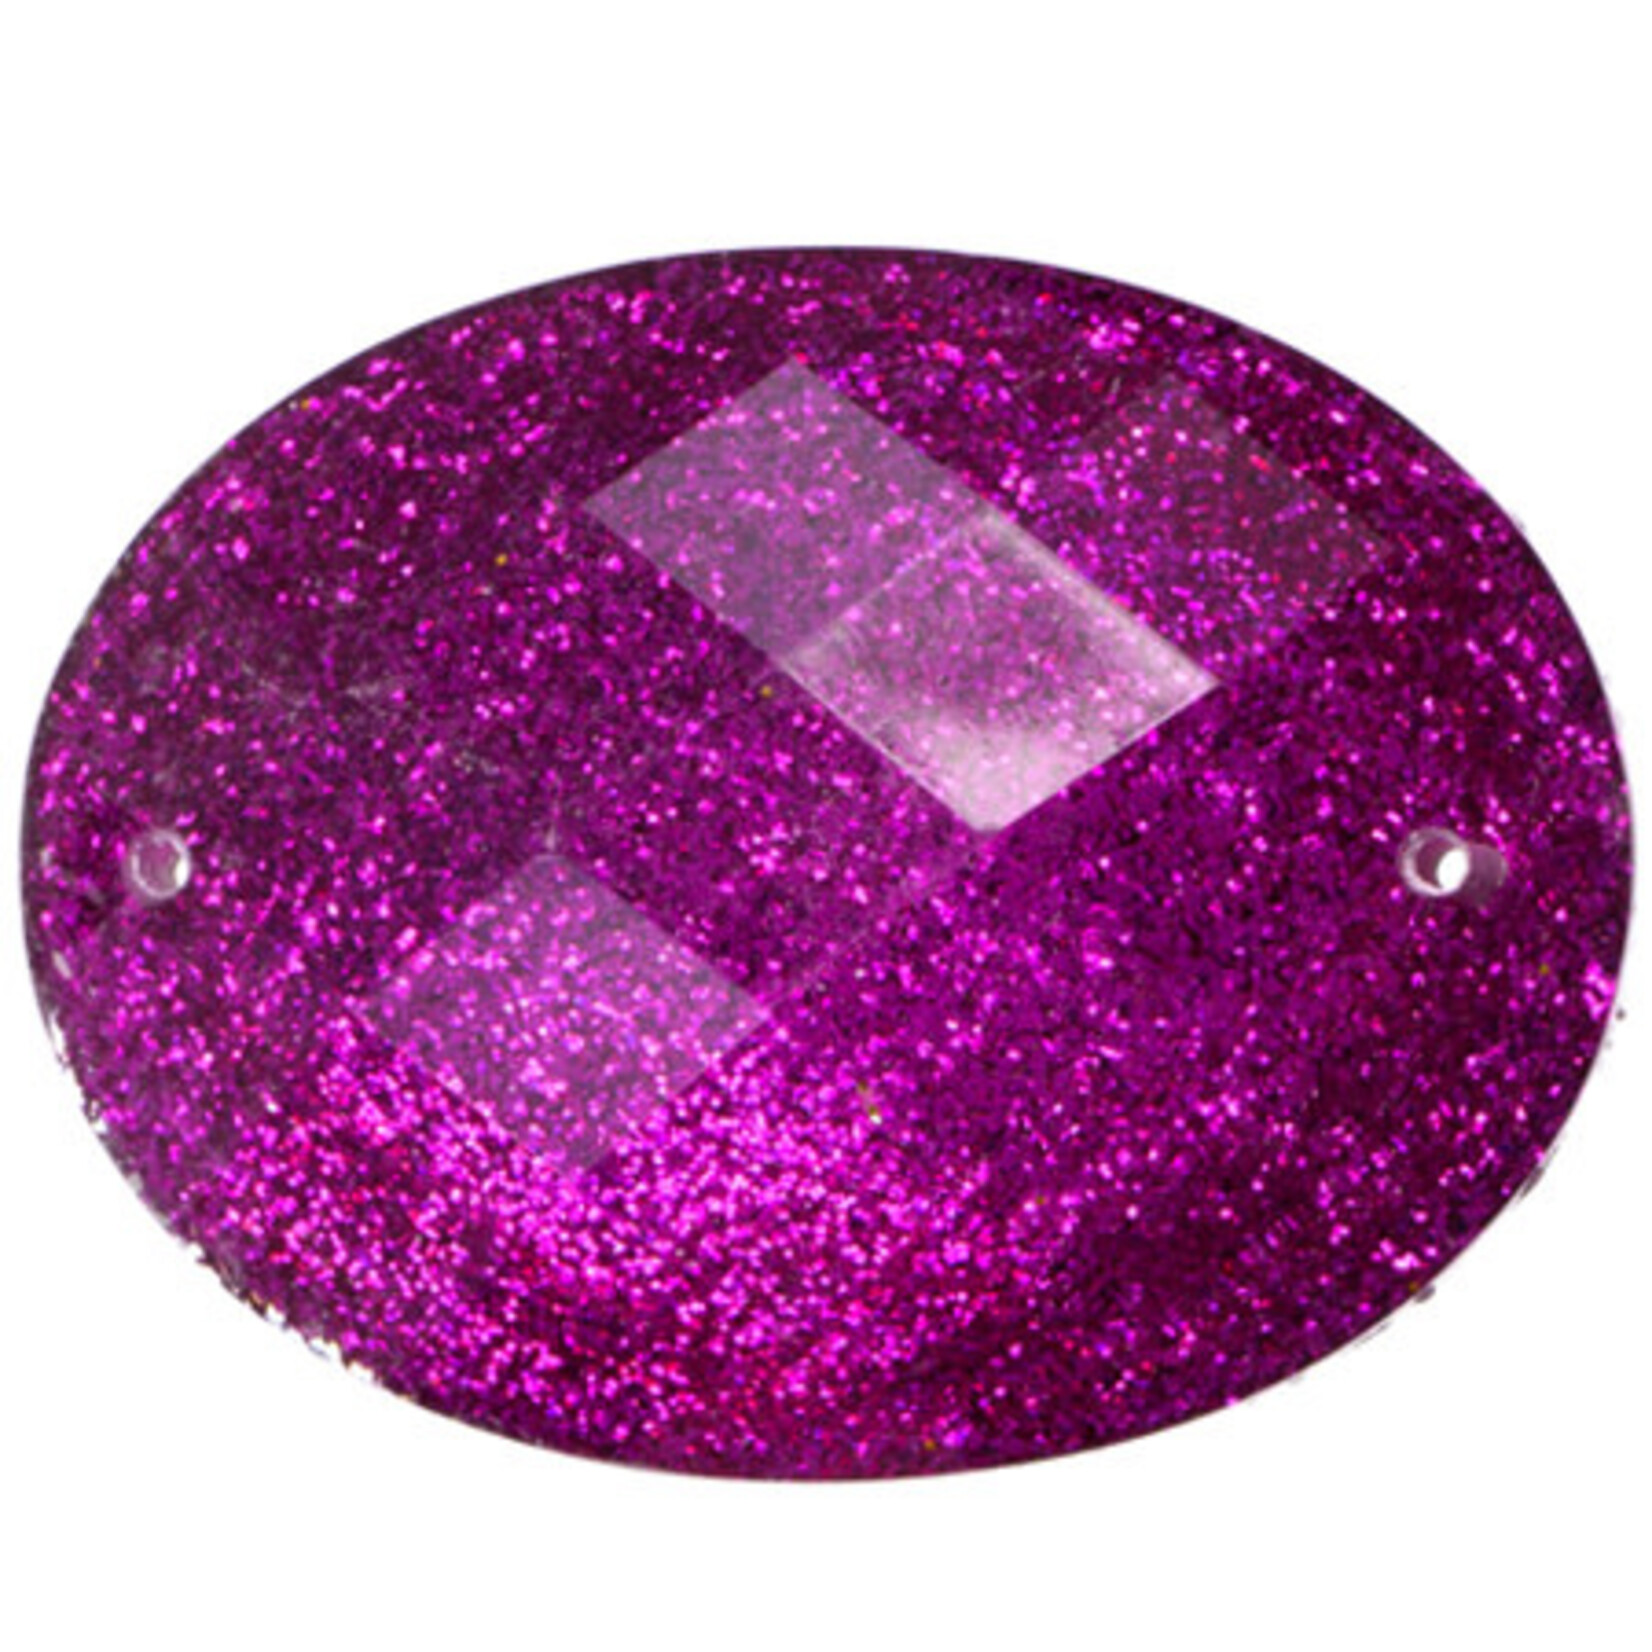 Resin Sew-on Glitter Stone 30x40mm Oval